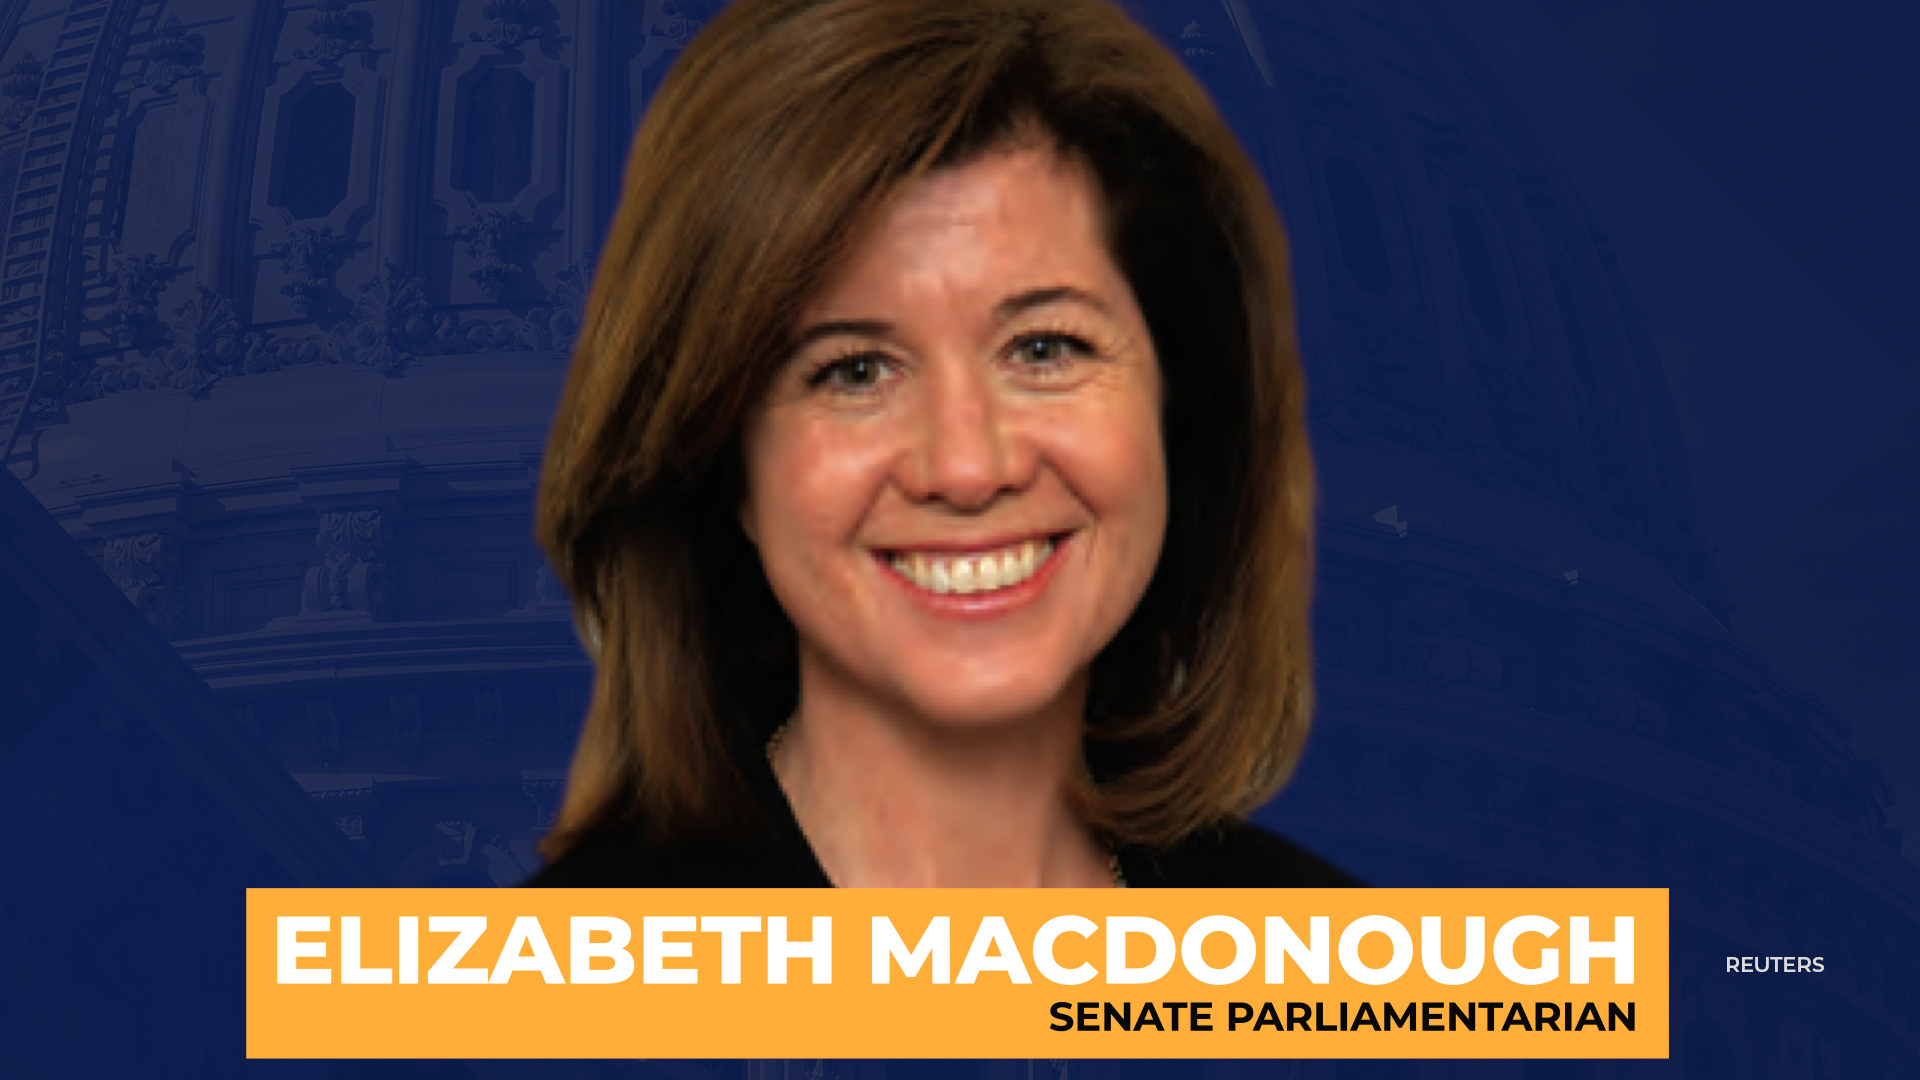 Senate Parliamentarian Elizabeth MacDonough